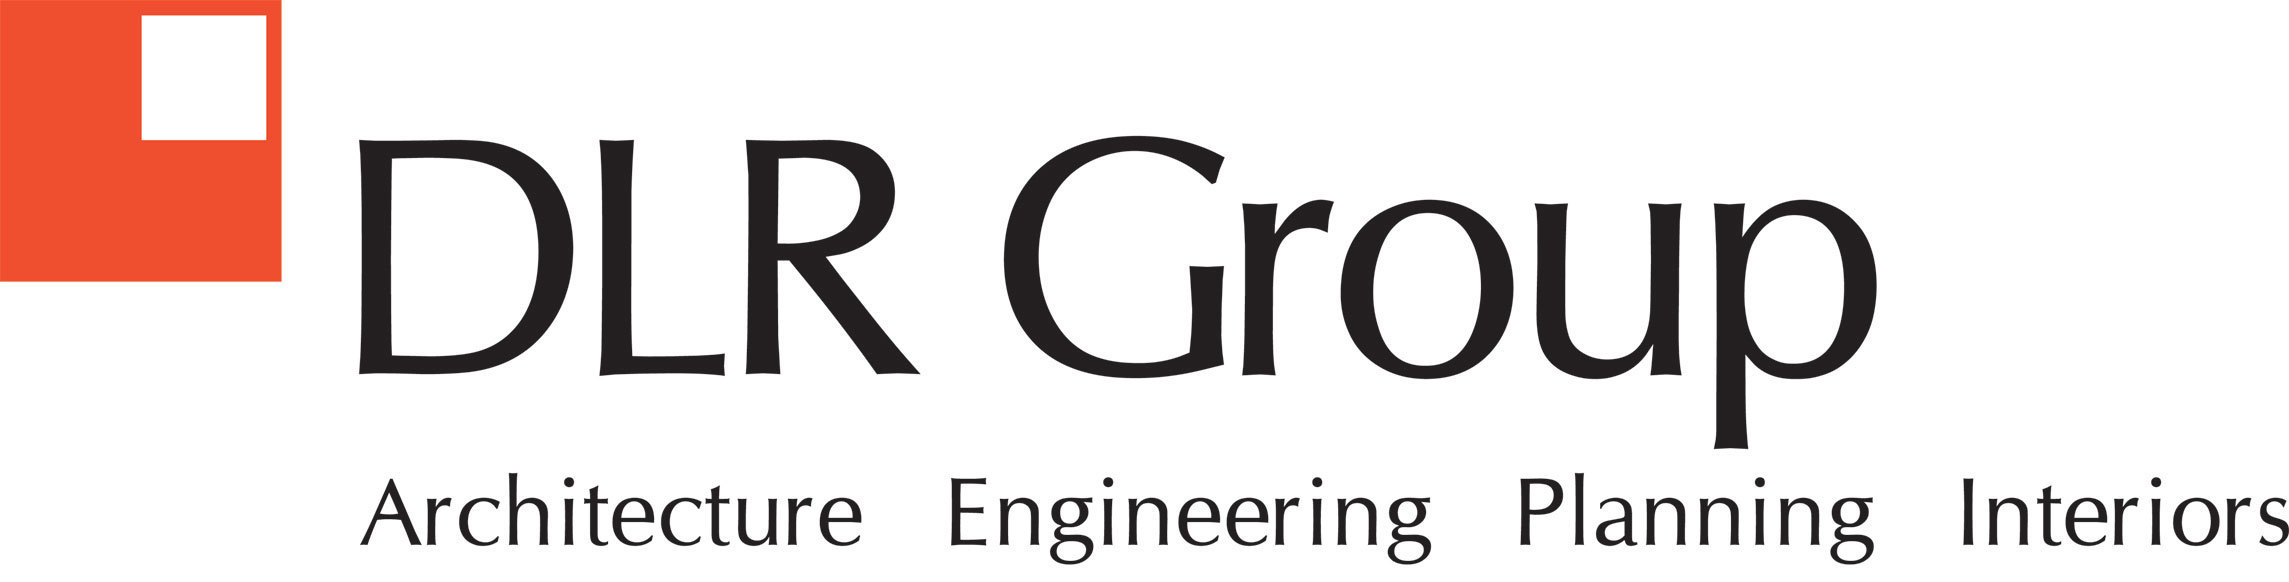 dlr group logo